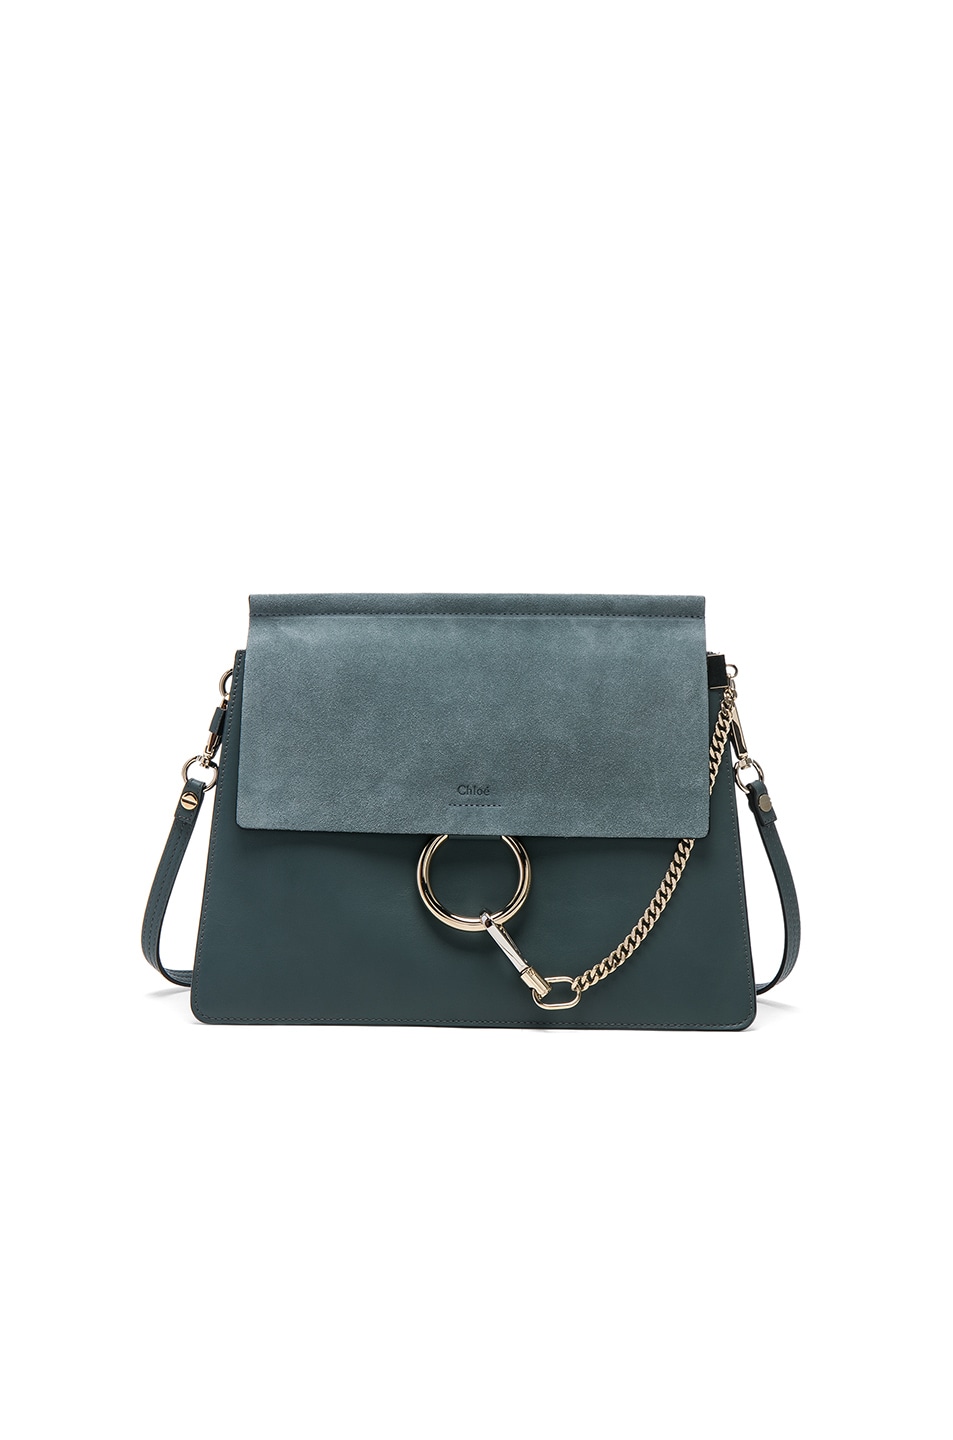 CHLOÉ Medium Leather Faye Bag, Cloudy Blue | ModeSens